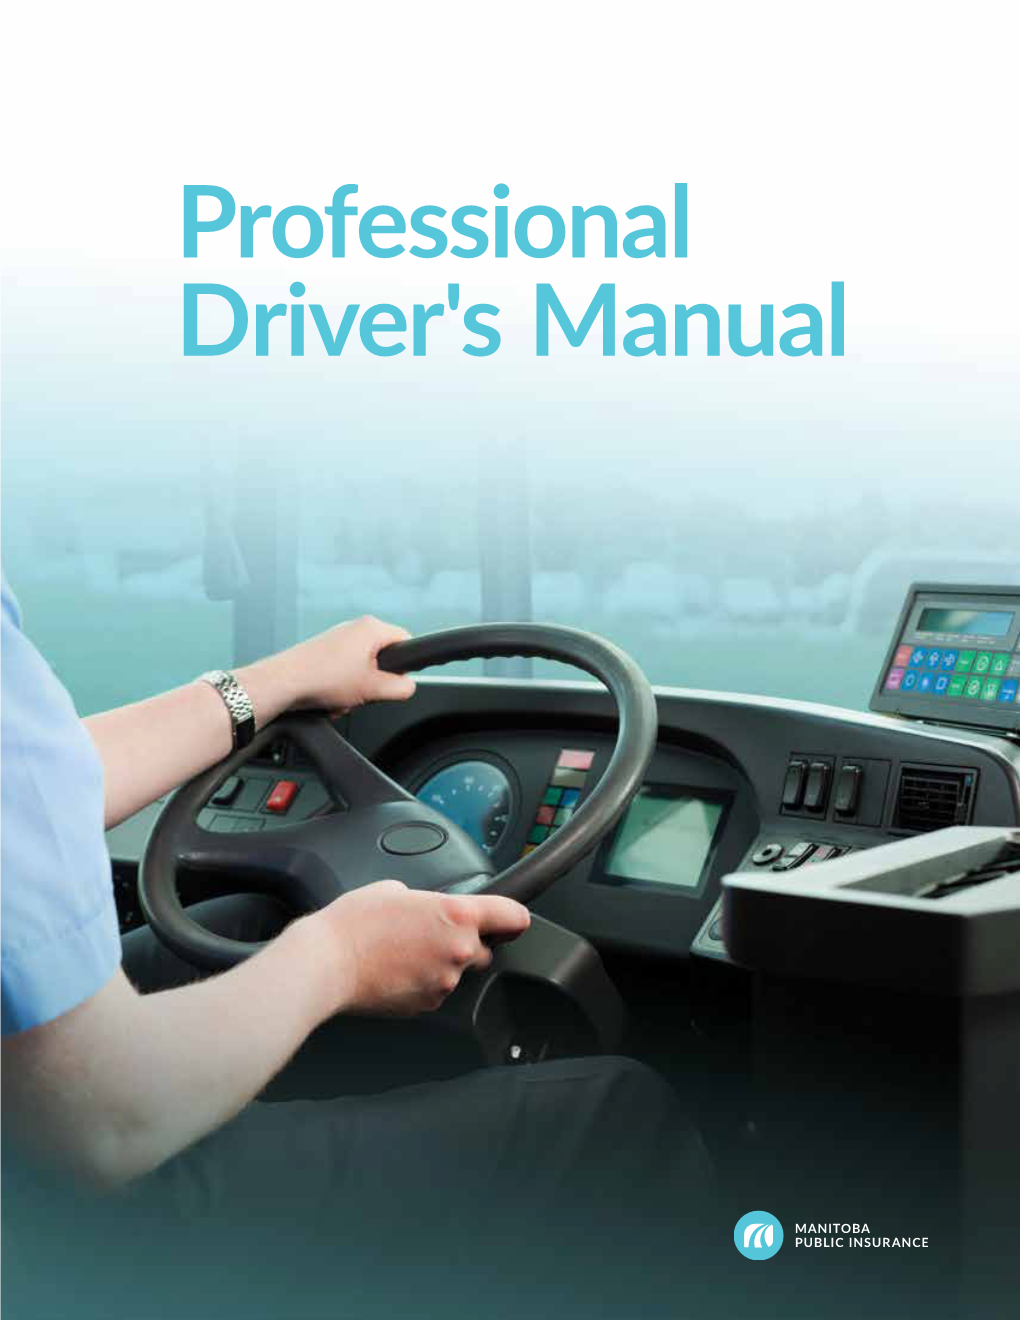 Professional Driver's Manual